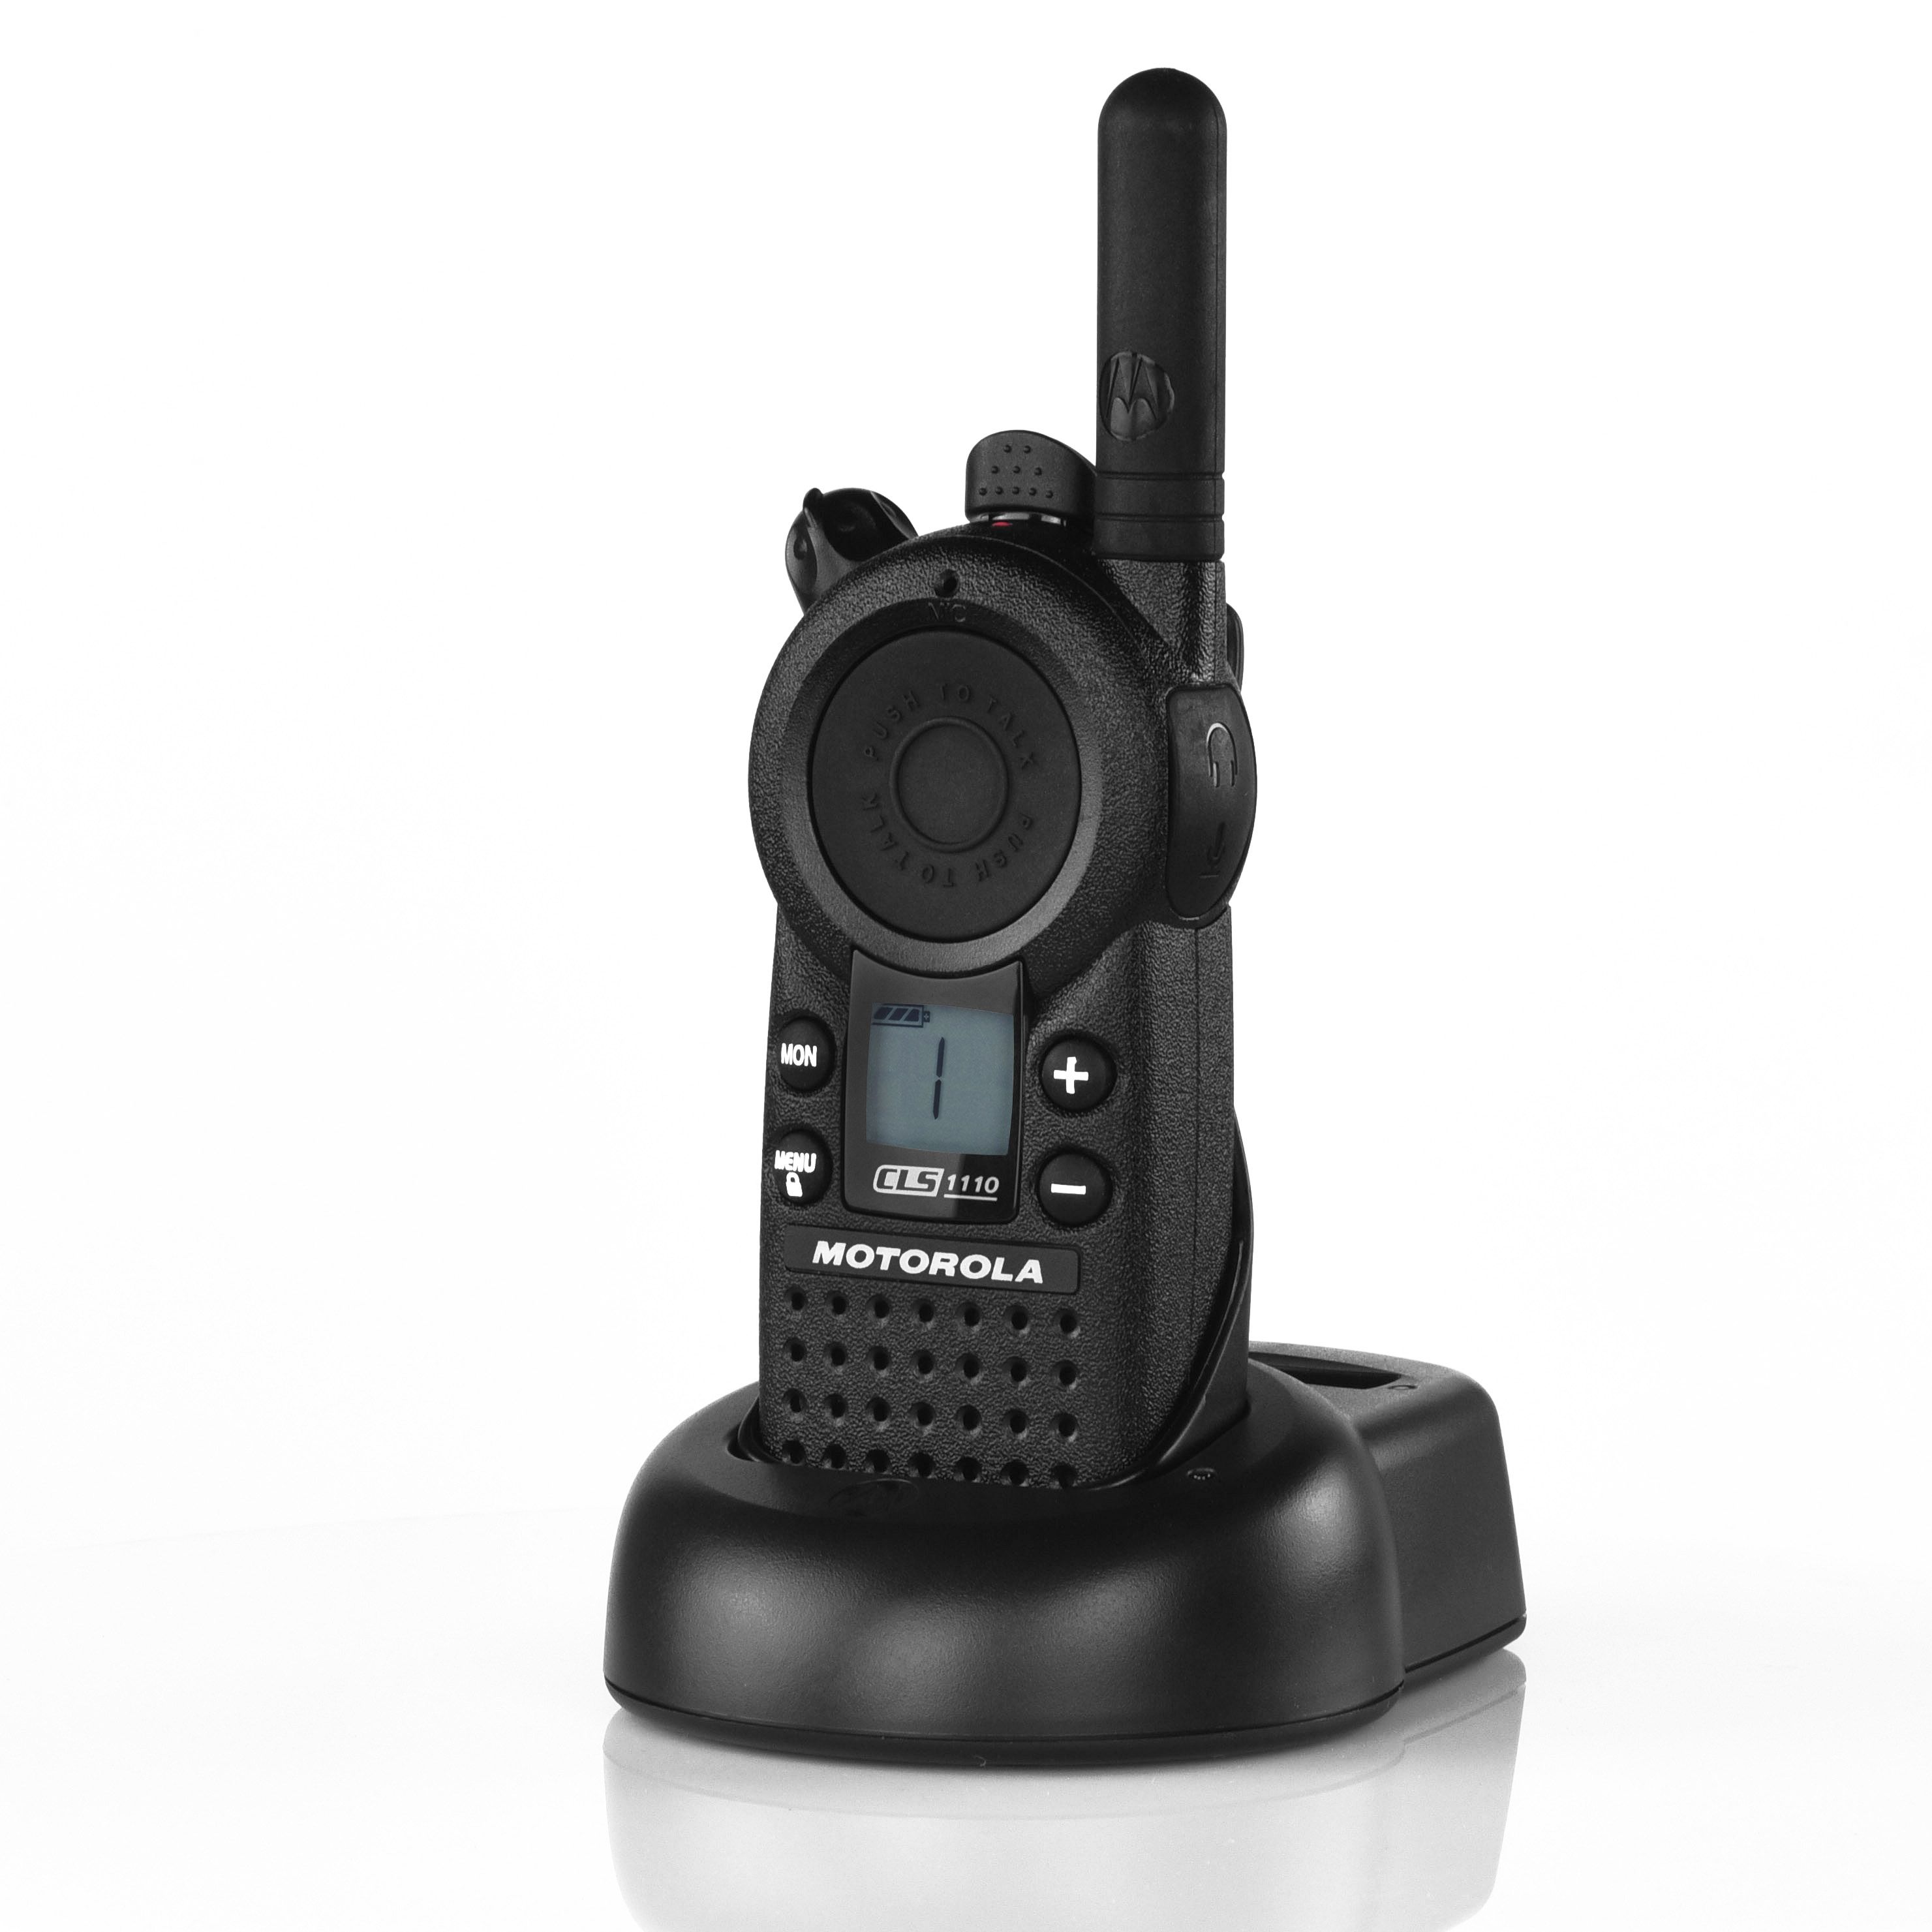 Motorola CLS1110 (4-Radios) Motorola CLS1110 Two-way Radio for Business 